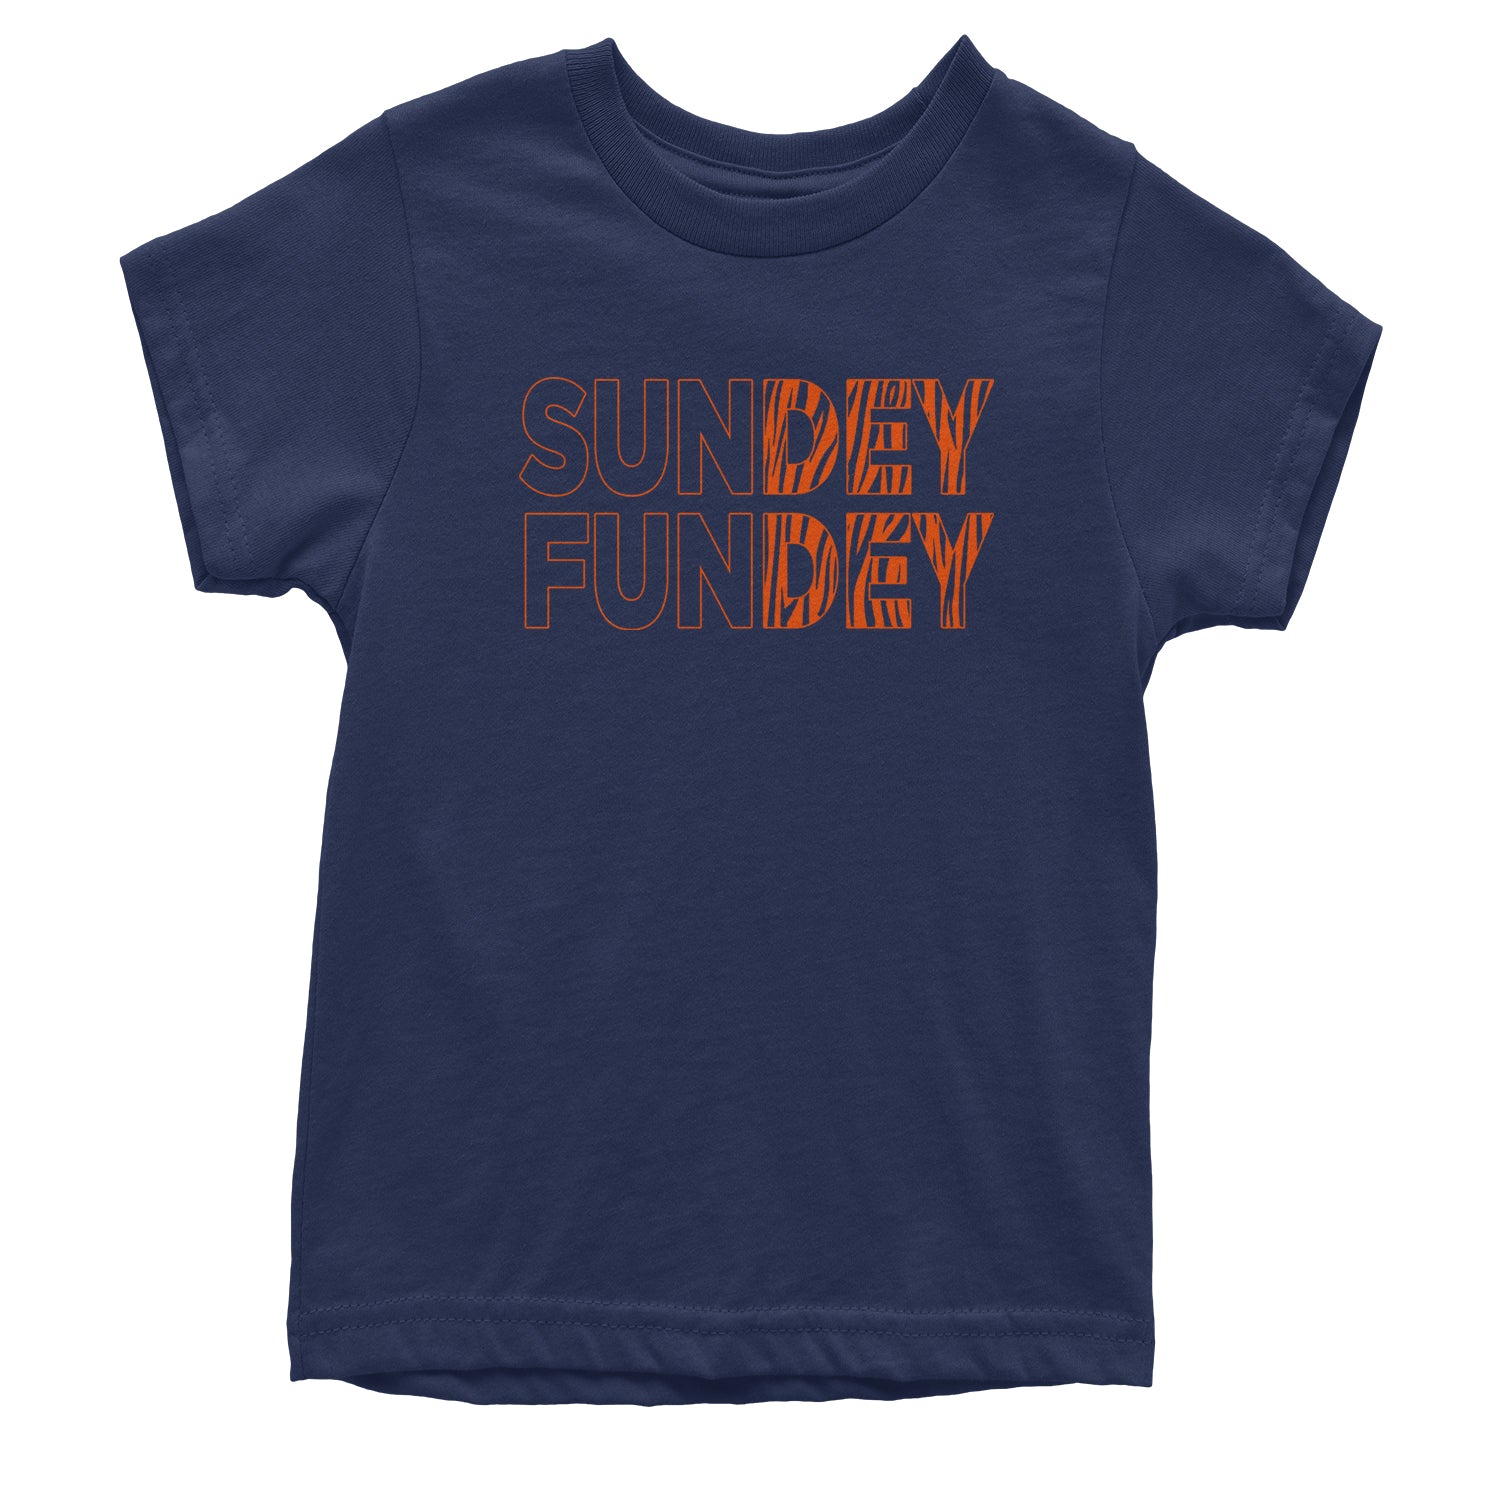 SunDEY FunDEY Sunday Funday Youth T-shirt ball, burrow, dey, foot, football, joe, ohio, sports, who by Expression Tees